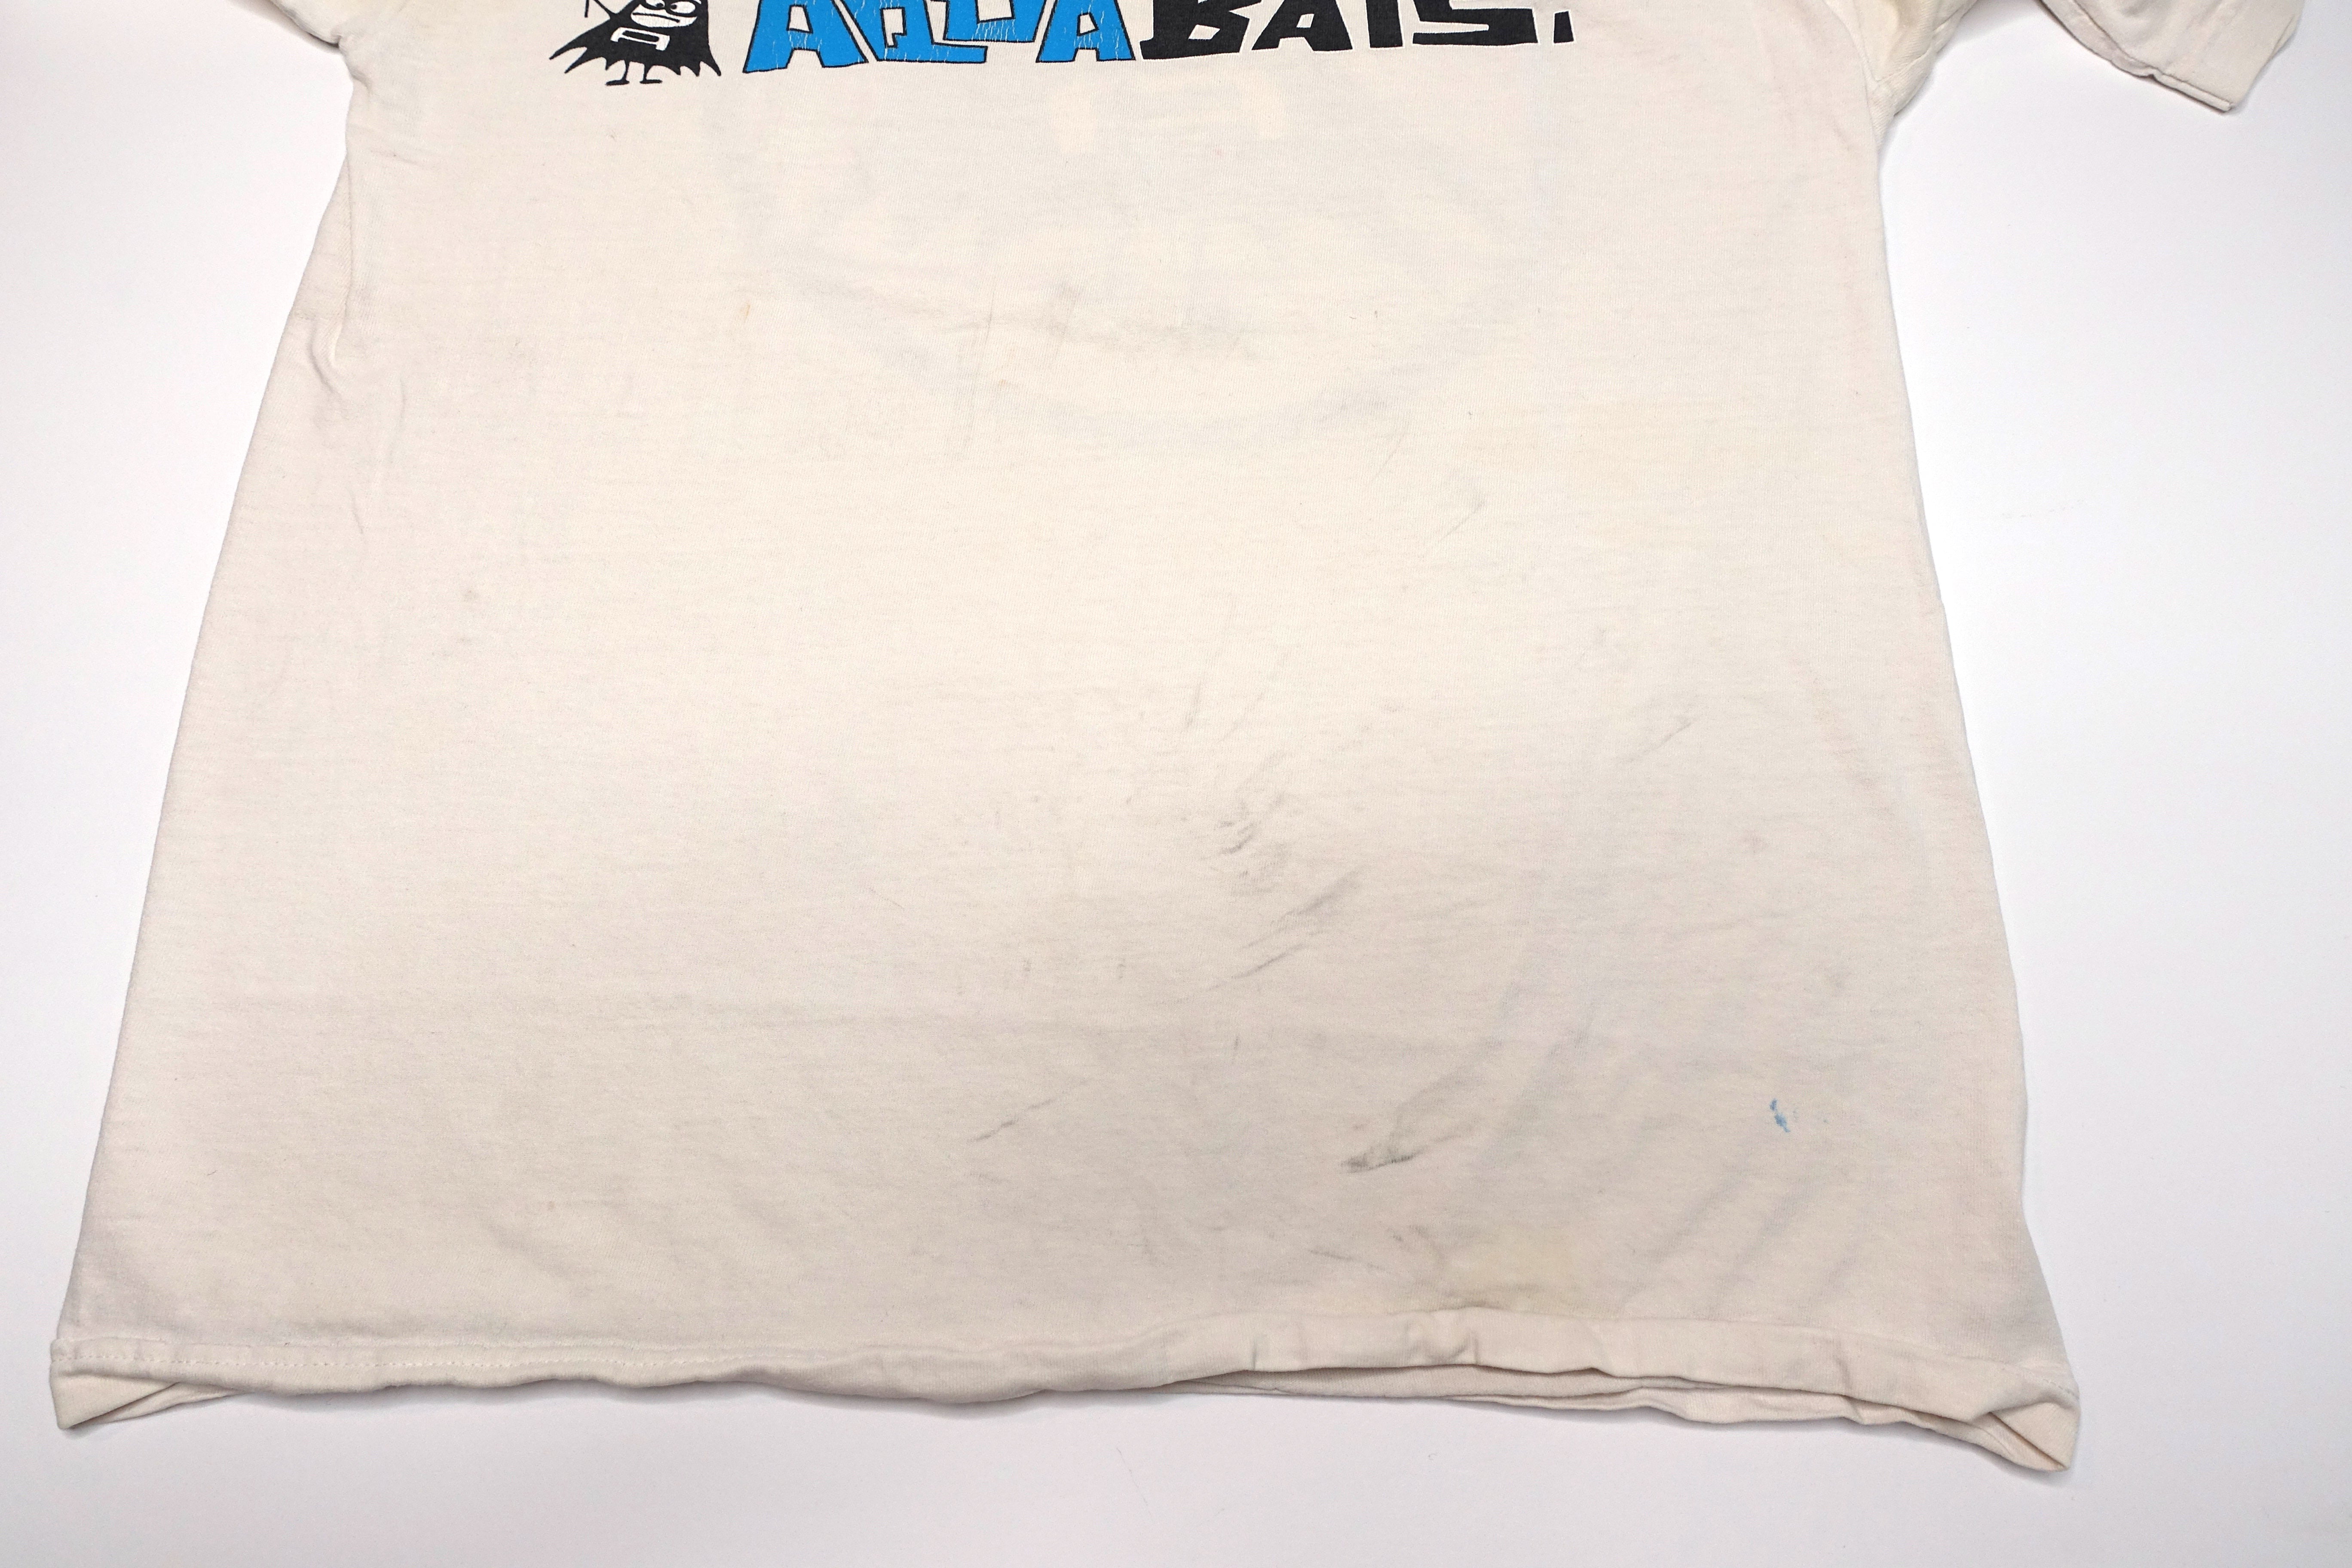 the Aquabats - The Return Of The Aquabats 1996 Tour Shirt Size Large